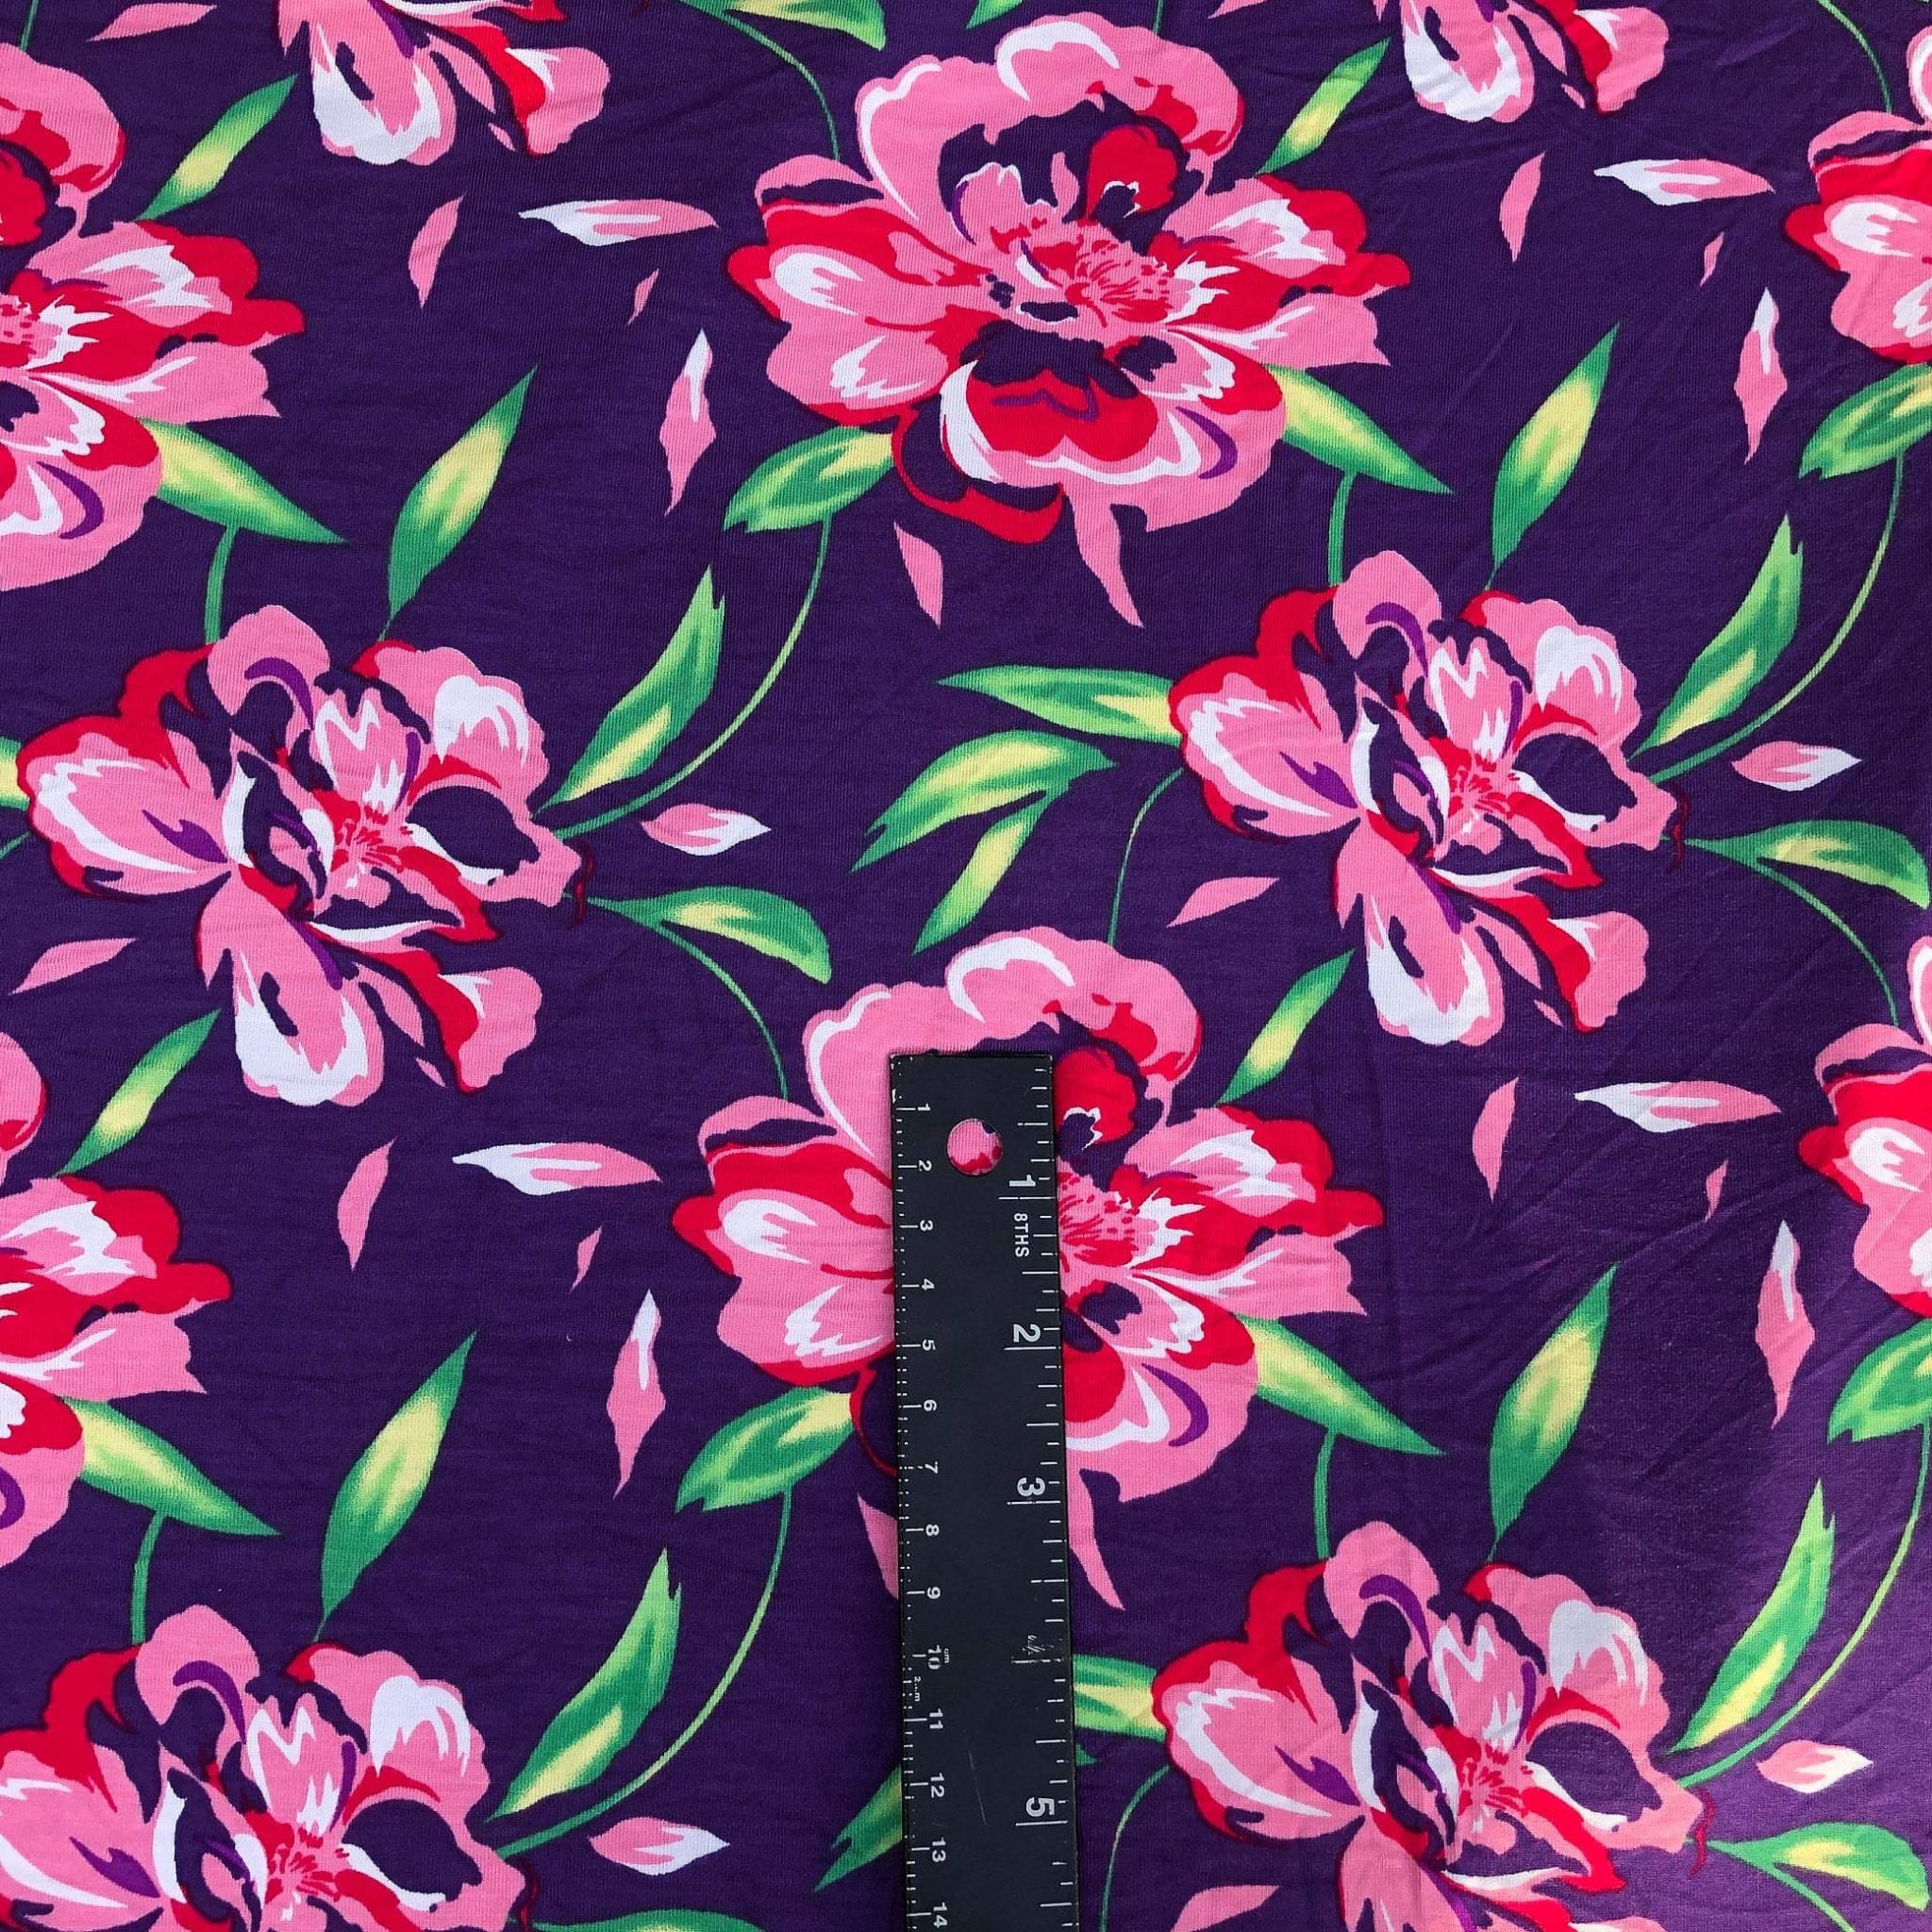 LV cosmic blossom flower print on Spandex Fabric, Stretch Jersey